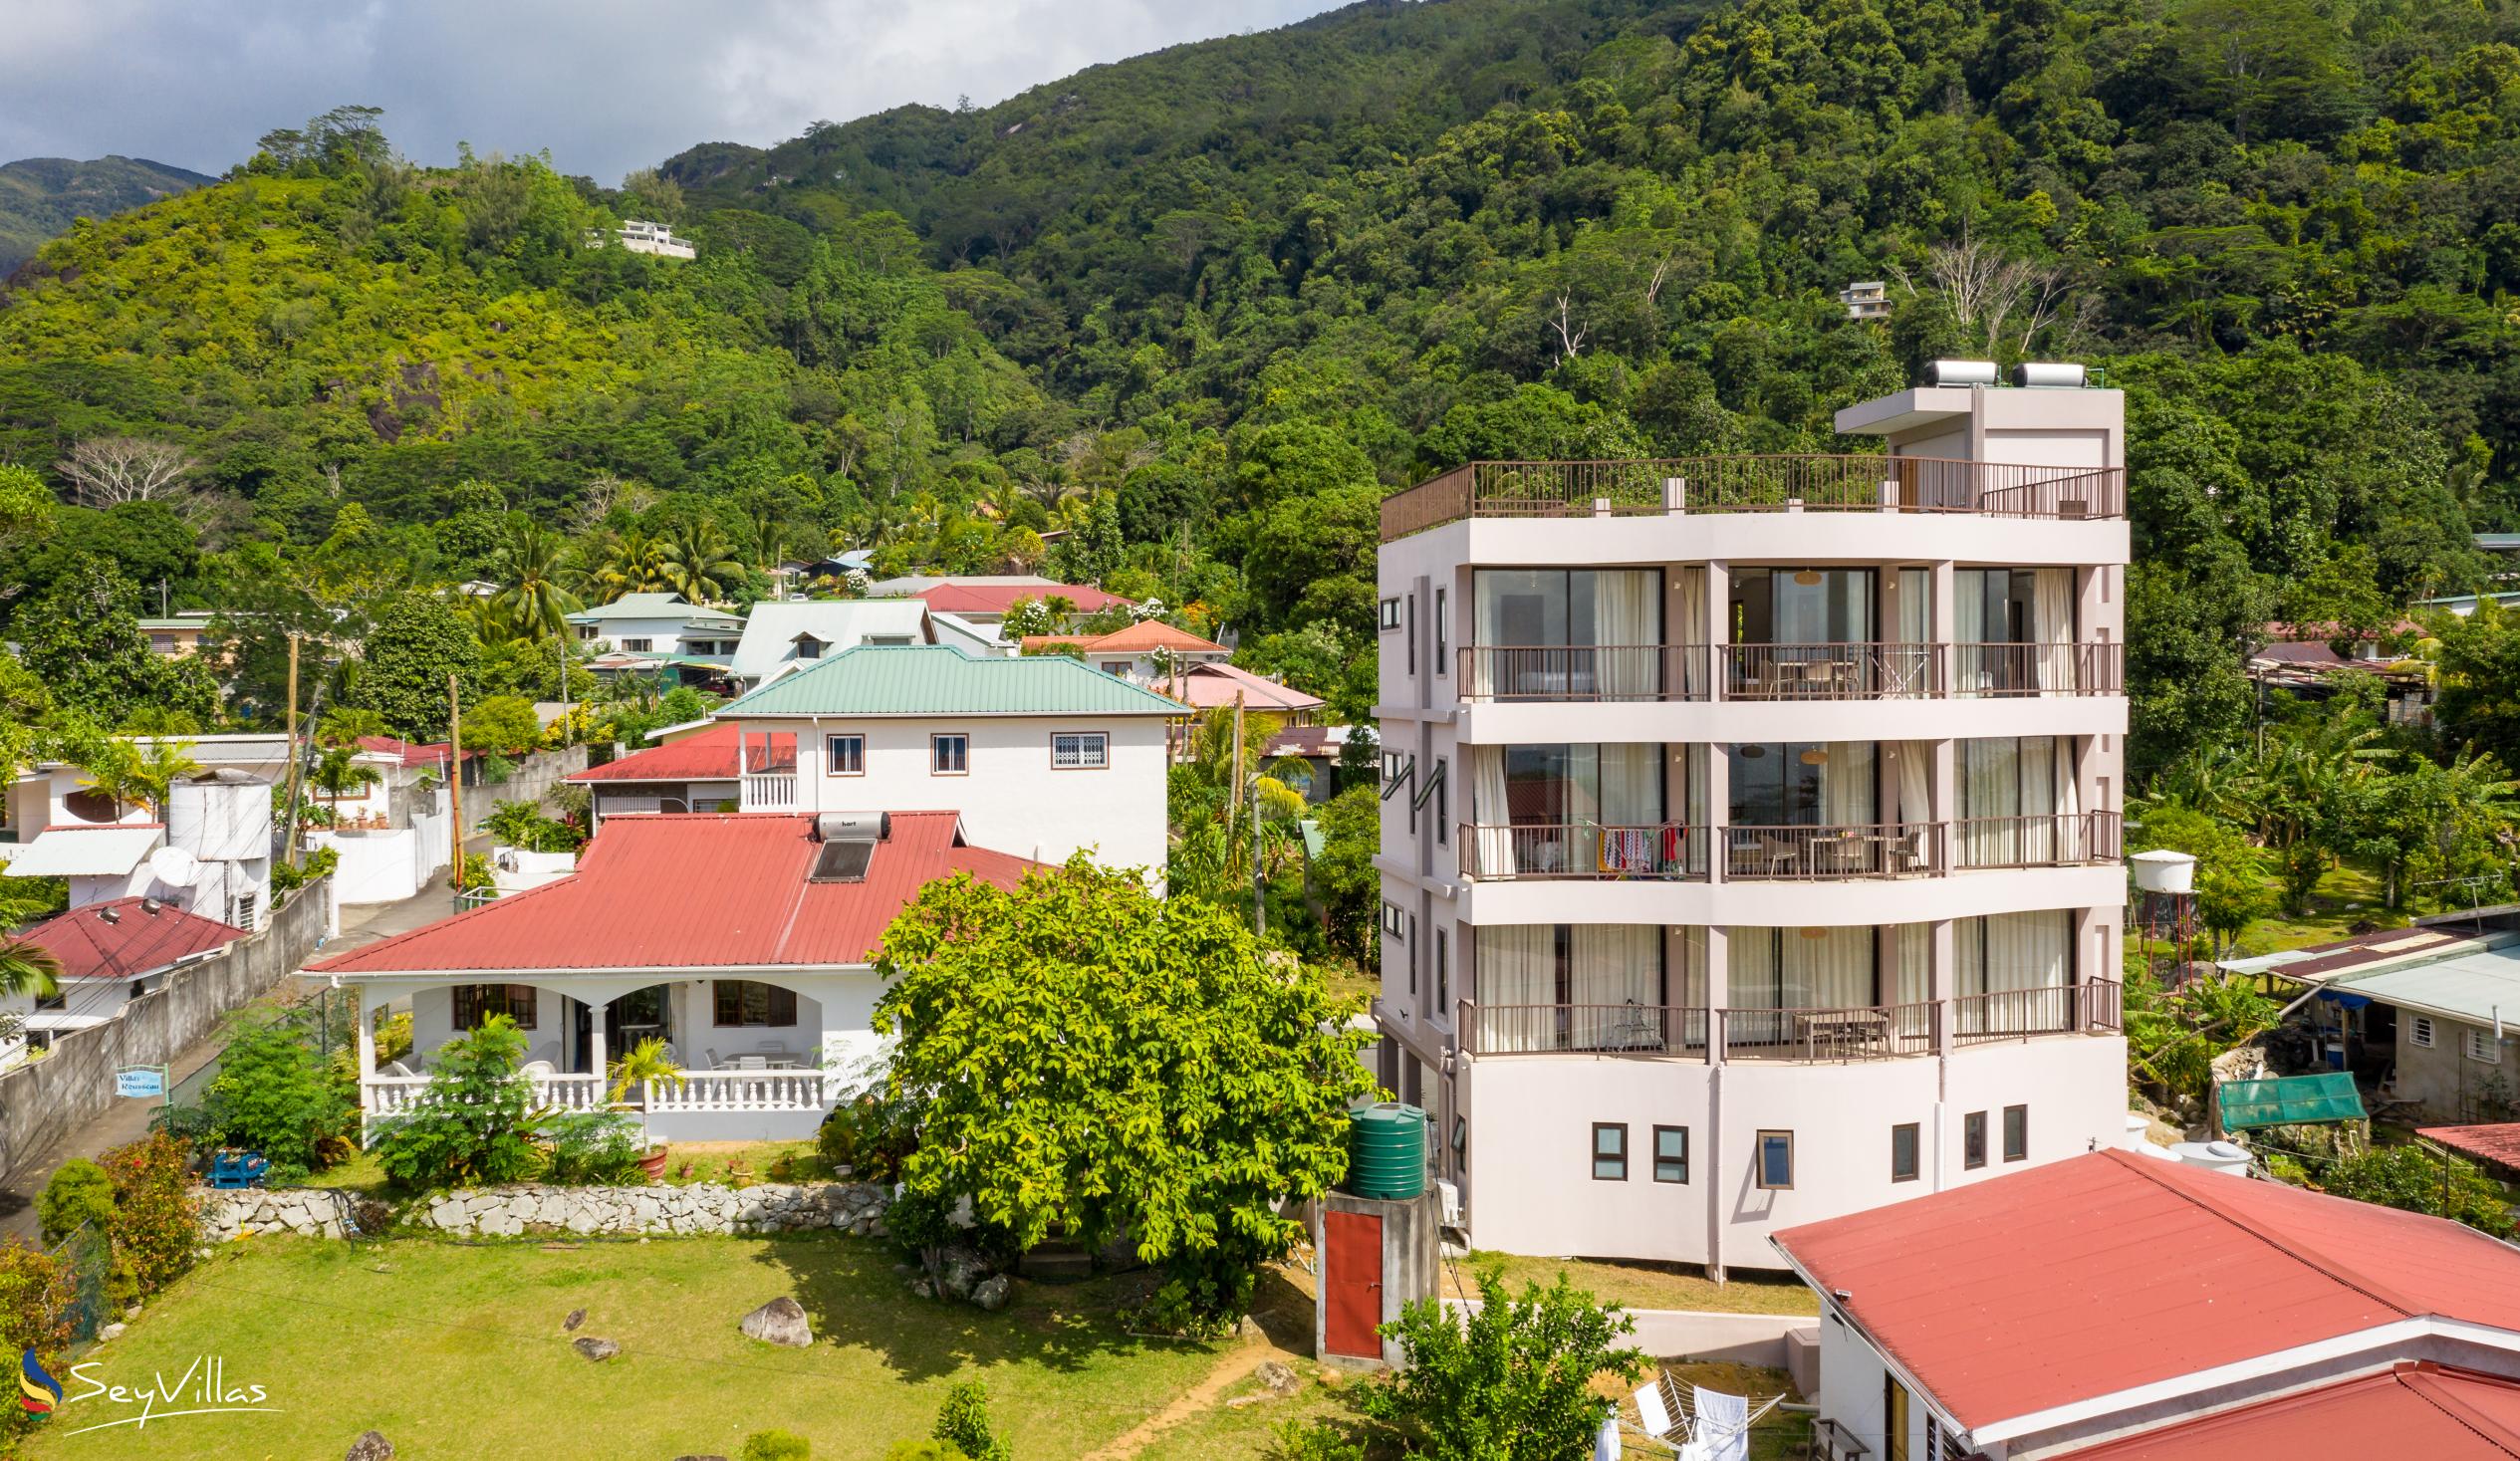 Photo 2: Villa Rousseau - Outdoor area - Mahé (Seychelles)